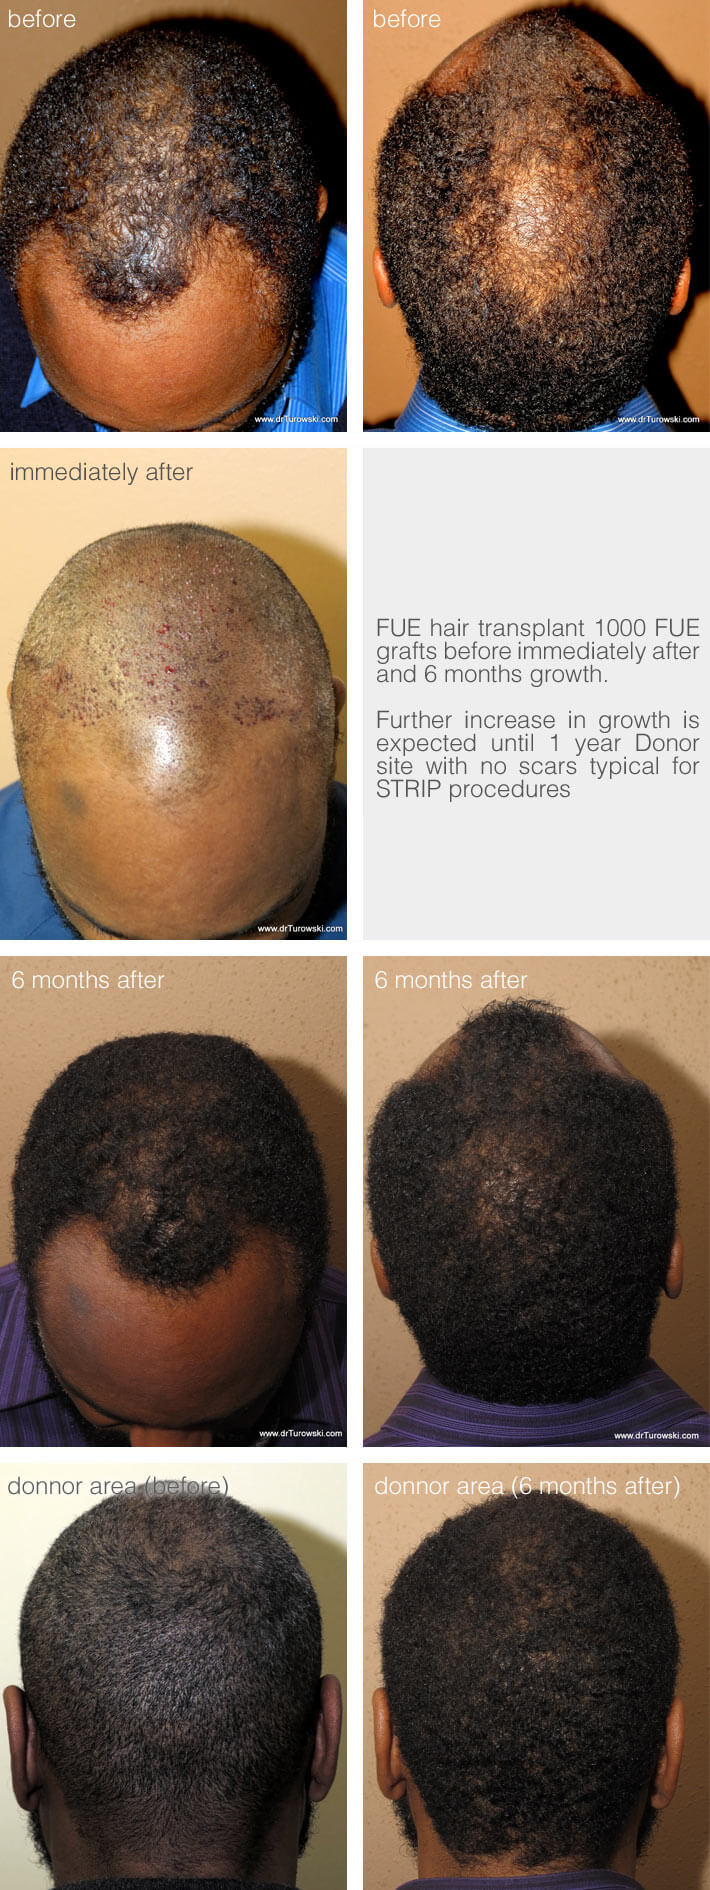 FUE hair transplant - 1000 grafts